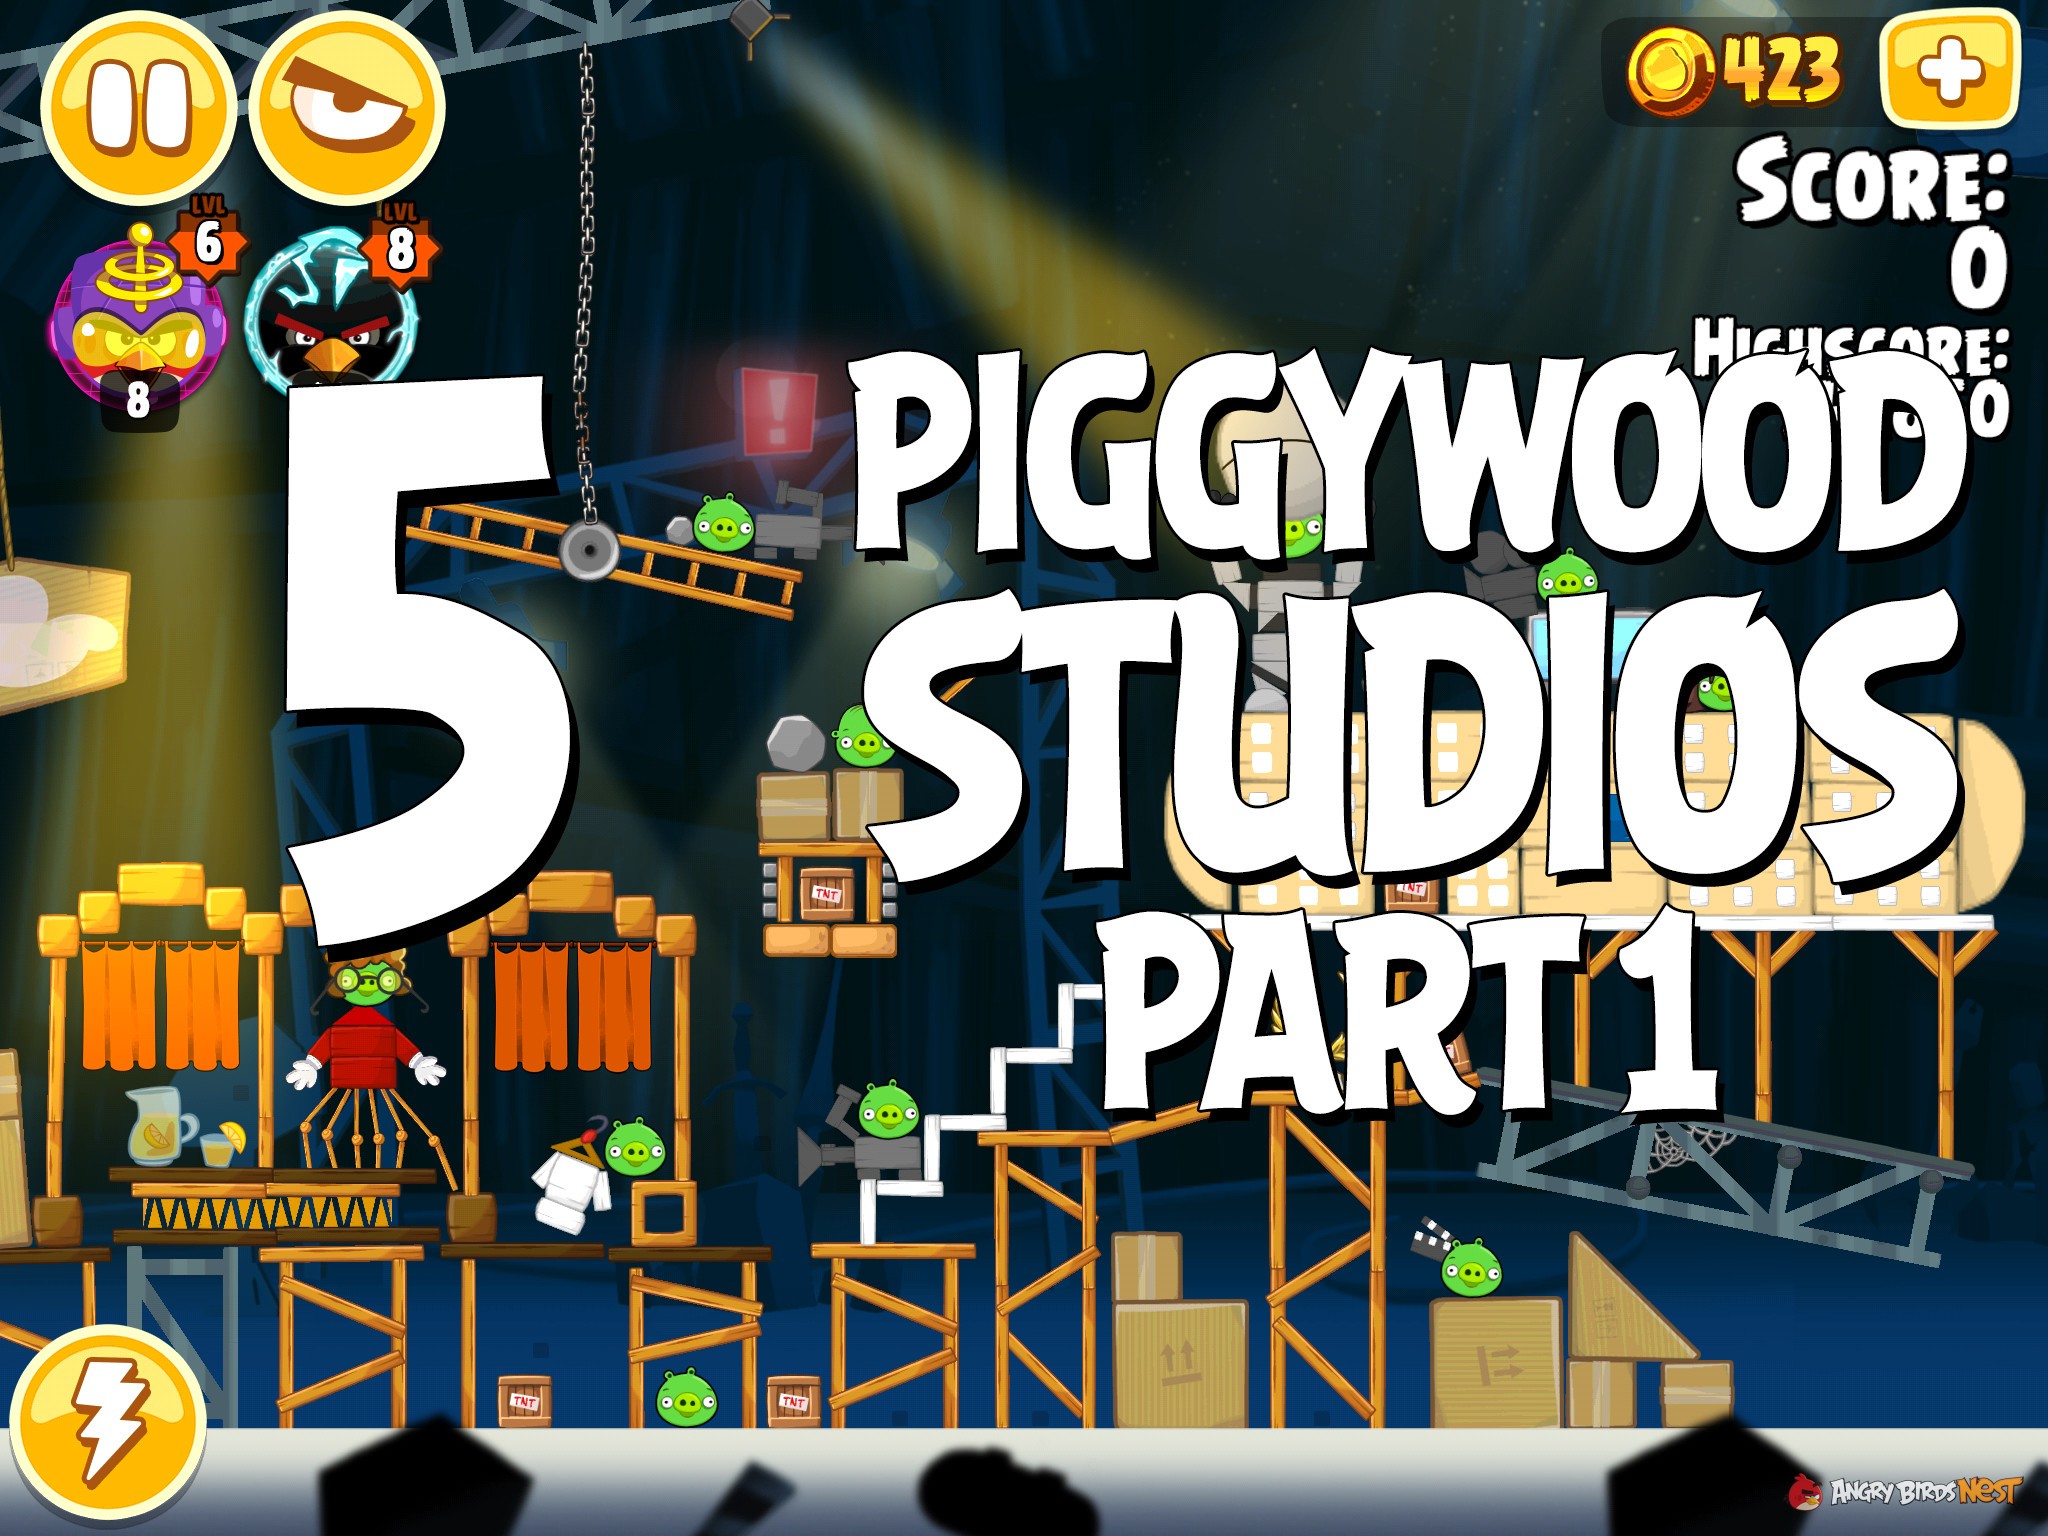 Angry Birds Seasons Piggywood Studios Part 1 Level 5